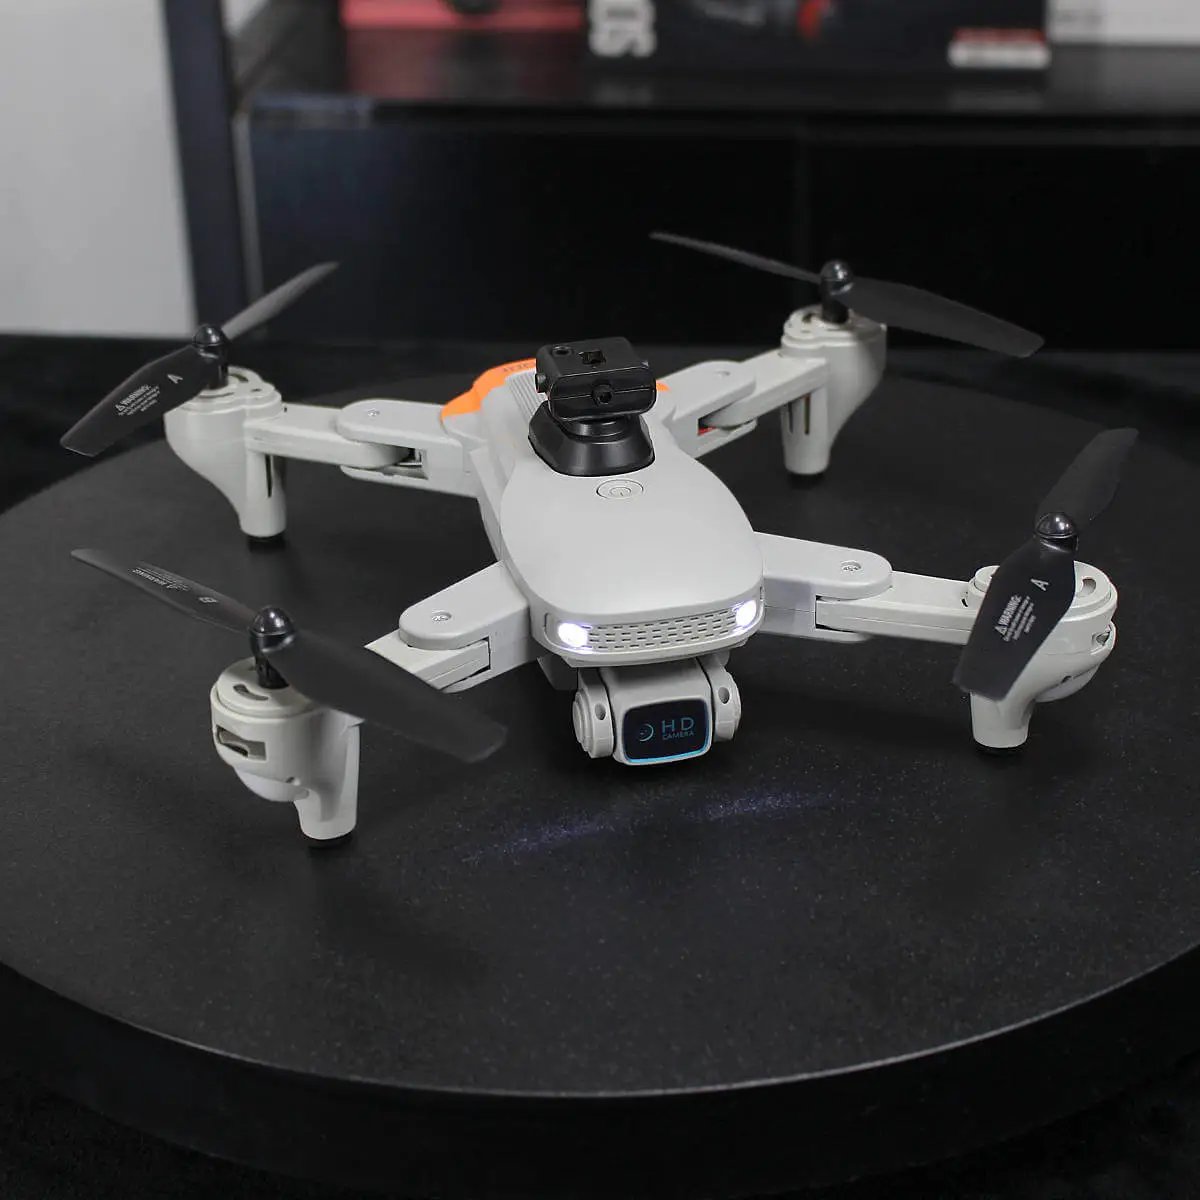 Hitorque SH007 Foldable GPS Drone with 8K HD Dual Lens-Hugmie